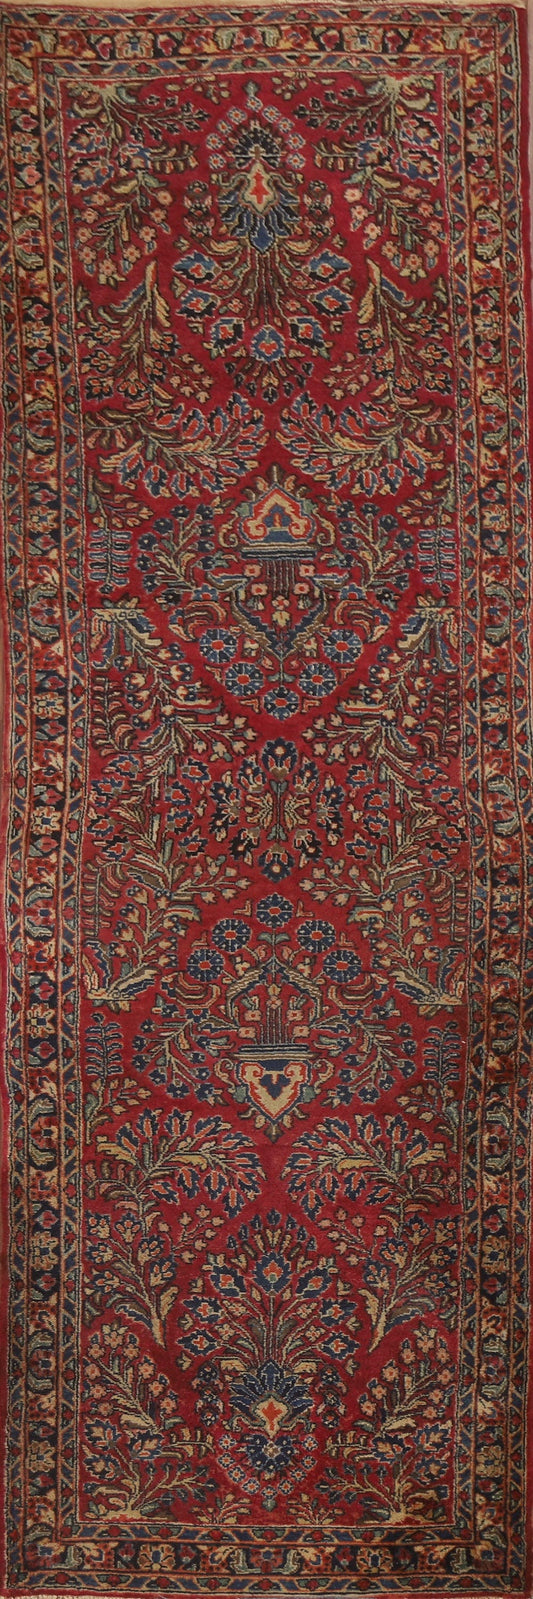 Antique Floral Sarouk Vegetable Dye Persian Rug 3x9